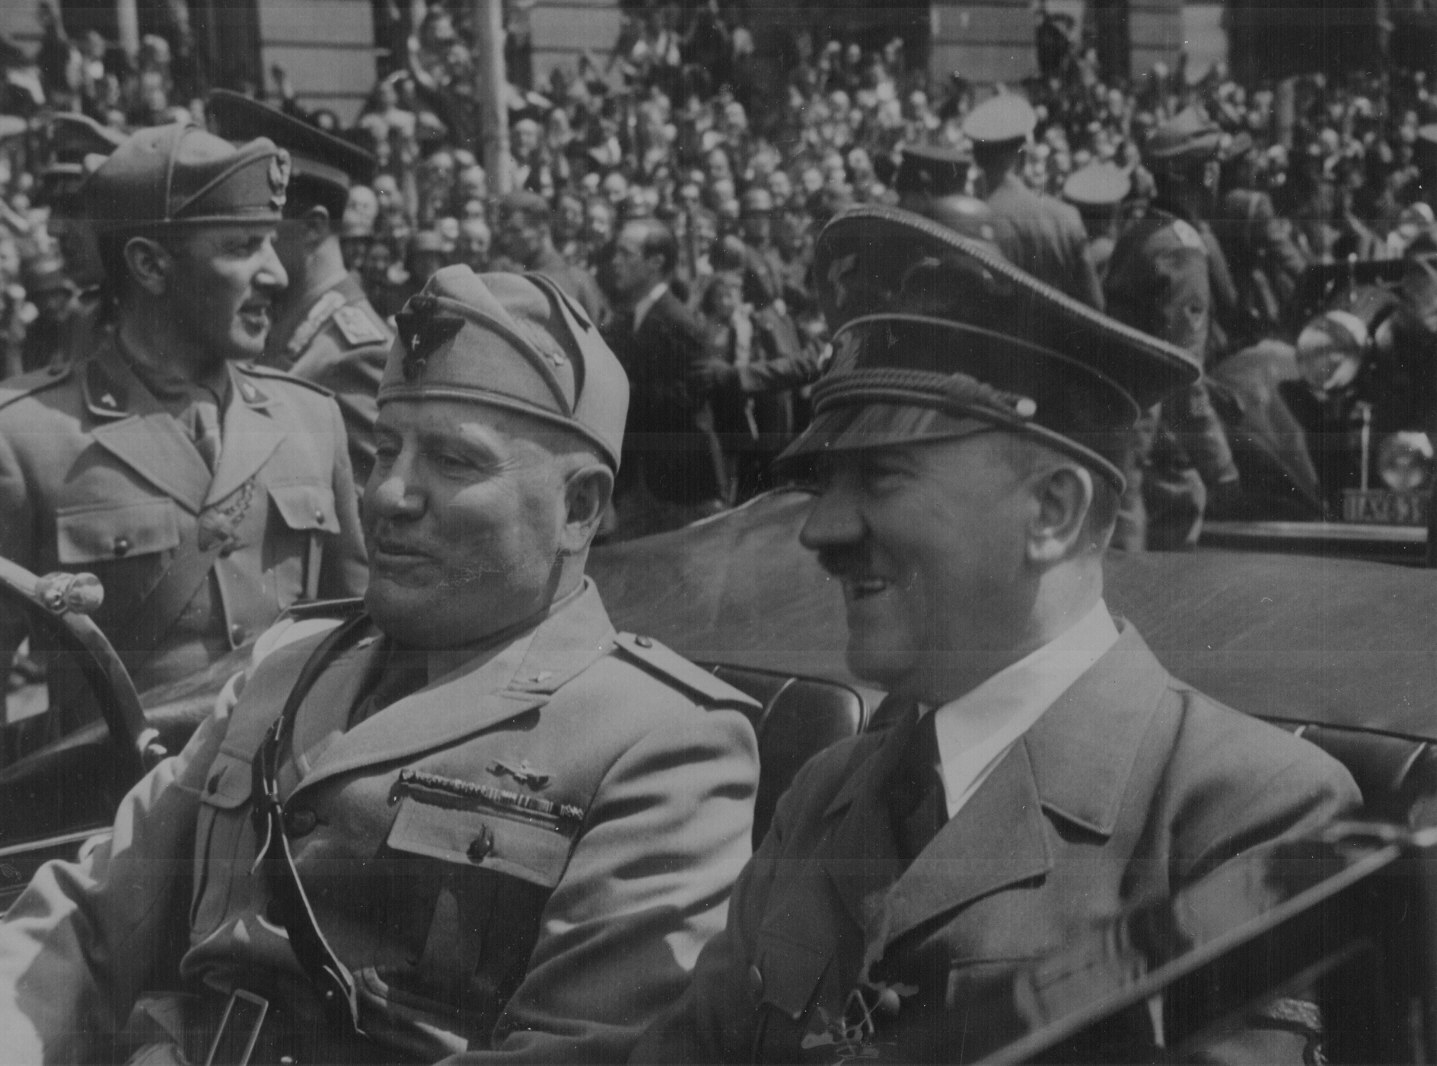 Benito Mussolini and Adolf Hitler in Munich, Germany, around June 1940